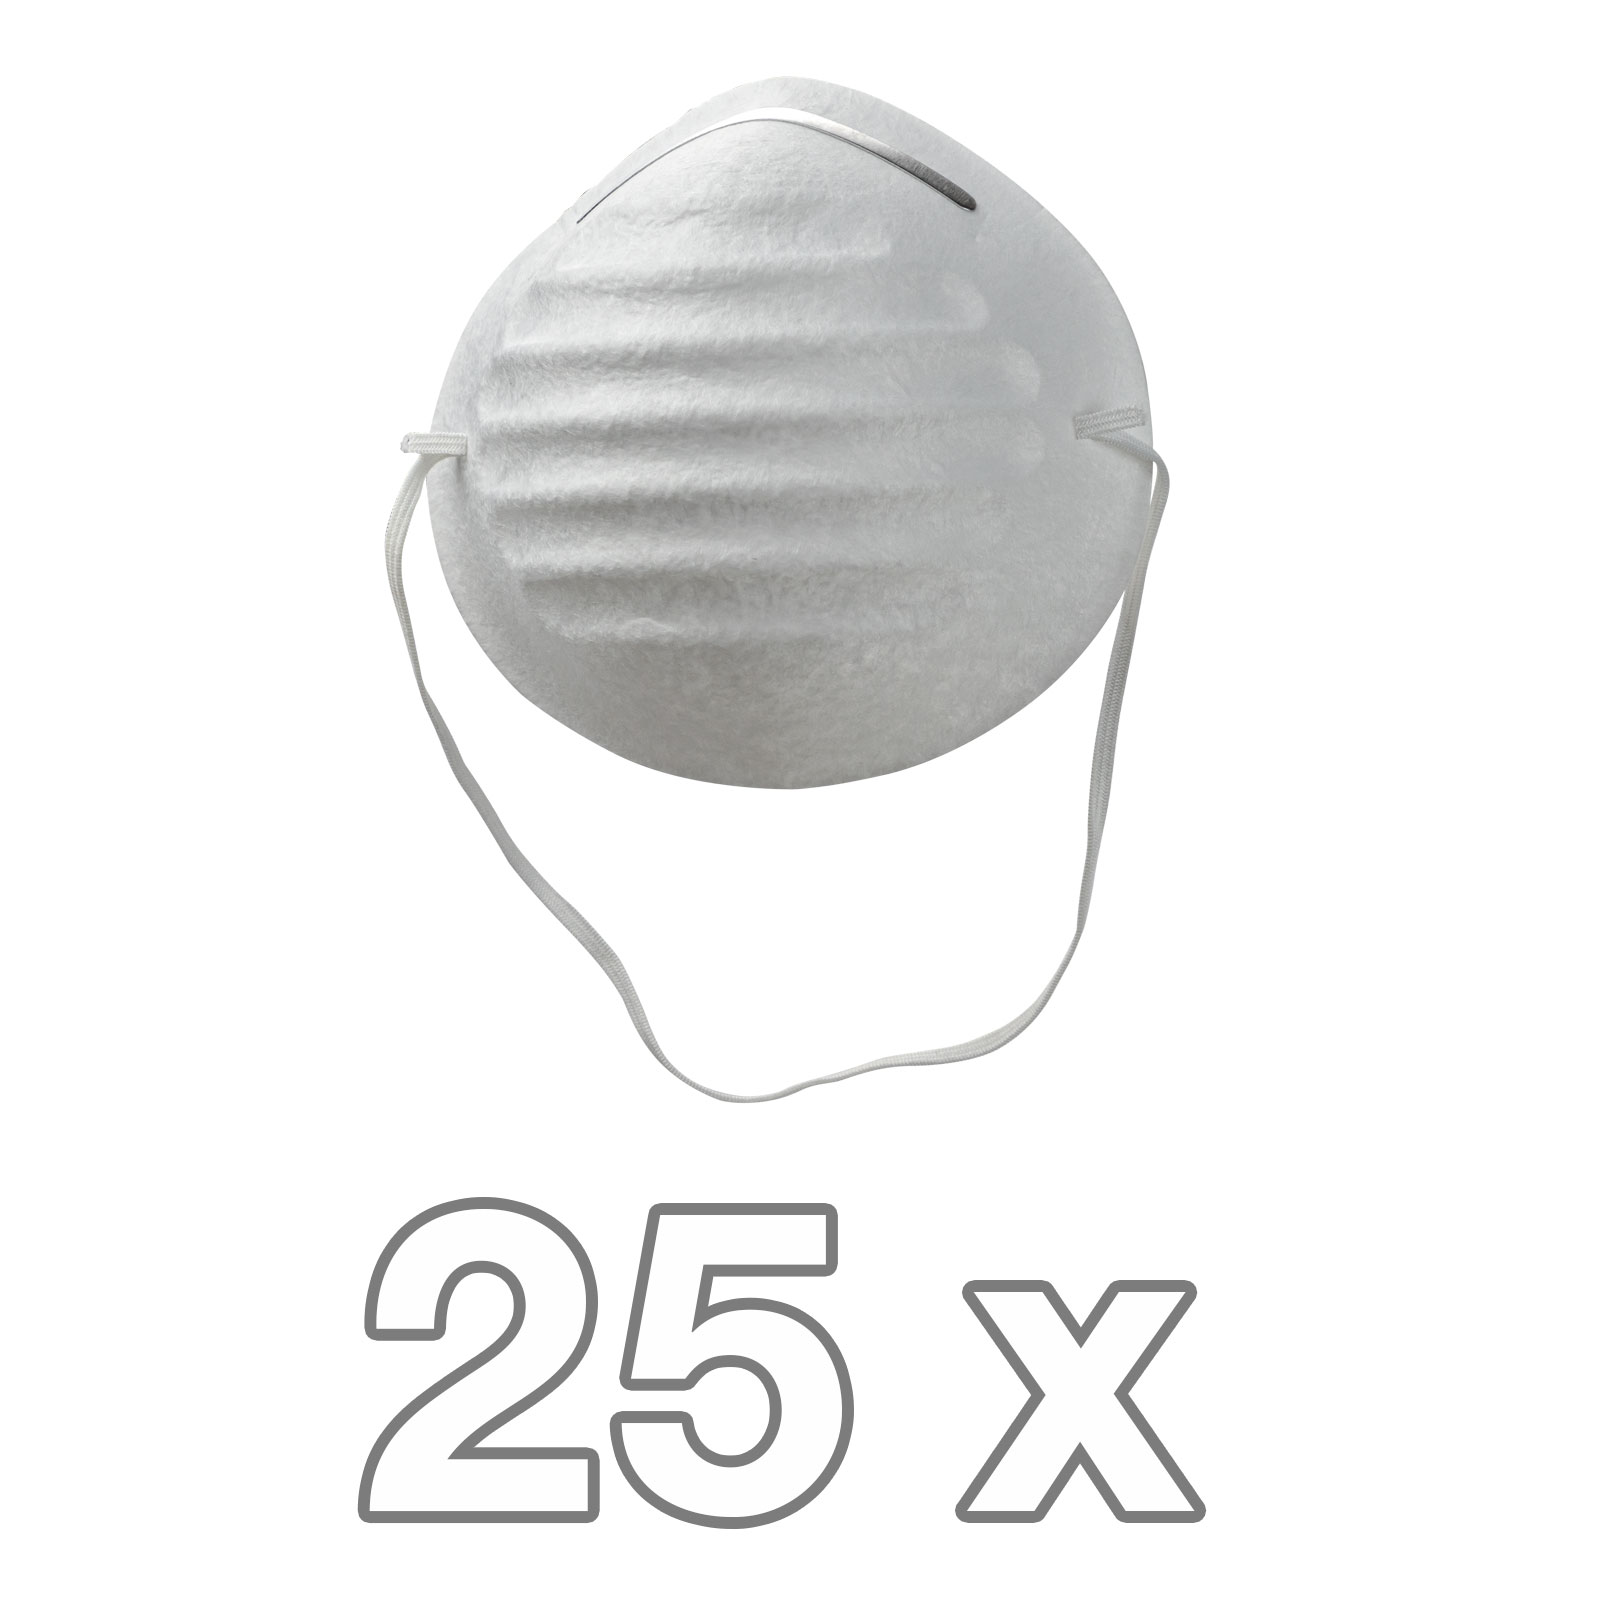 KesTek PET Staubmaske / Mundschutzmaske 25er Set, mit Nasenklammer, Nasenrücken